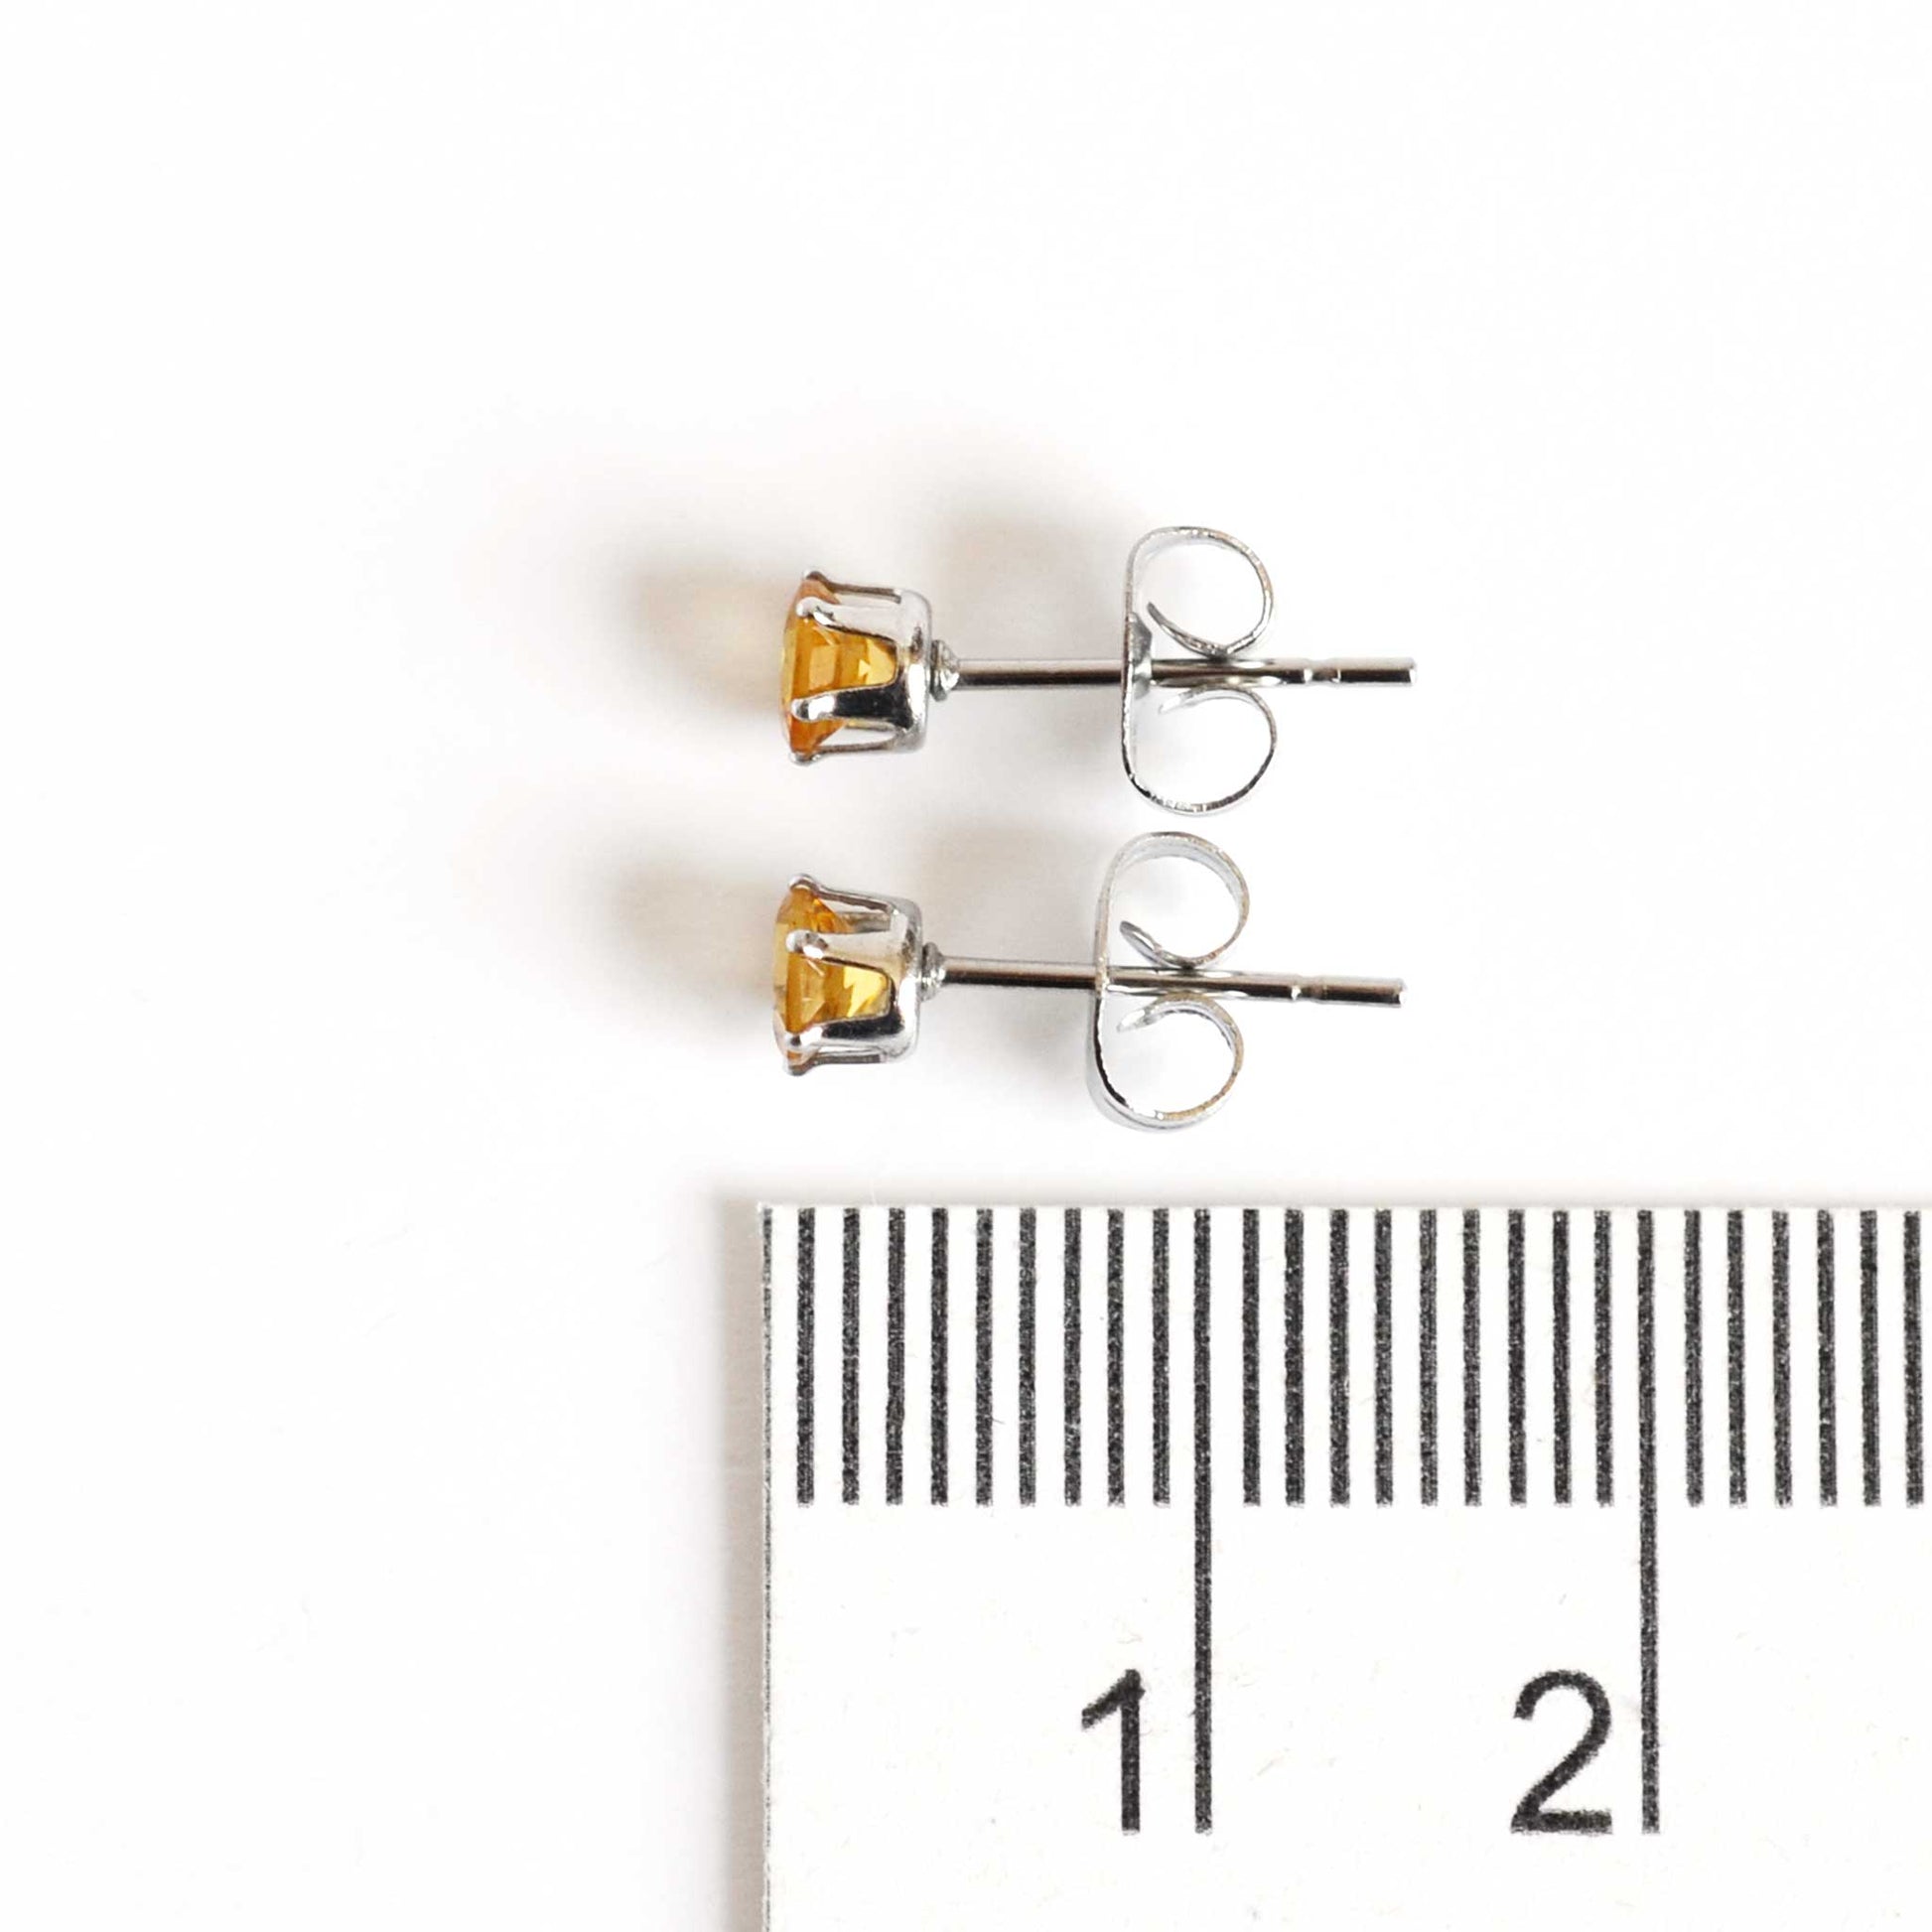 4mm Citrine stud earrings next to ruler